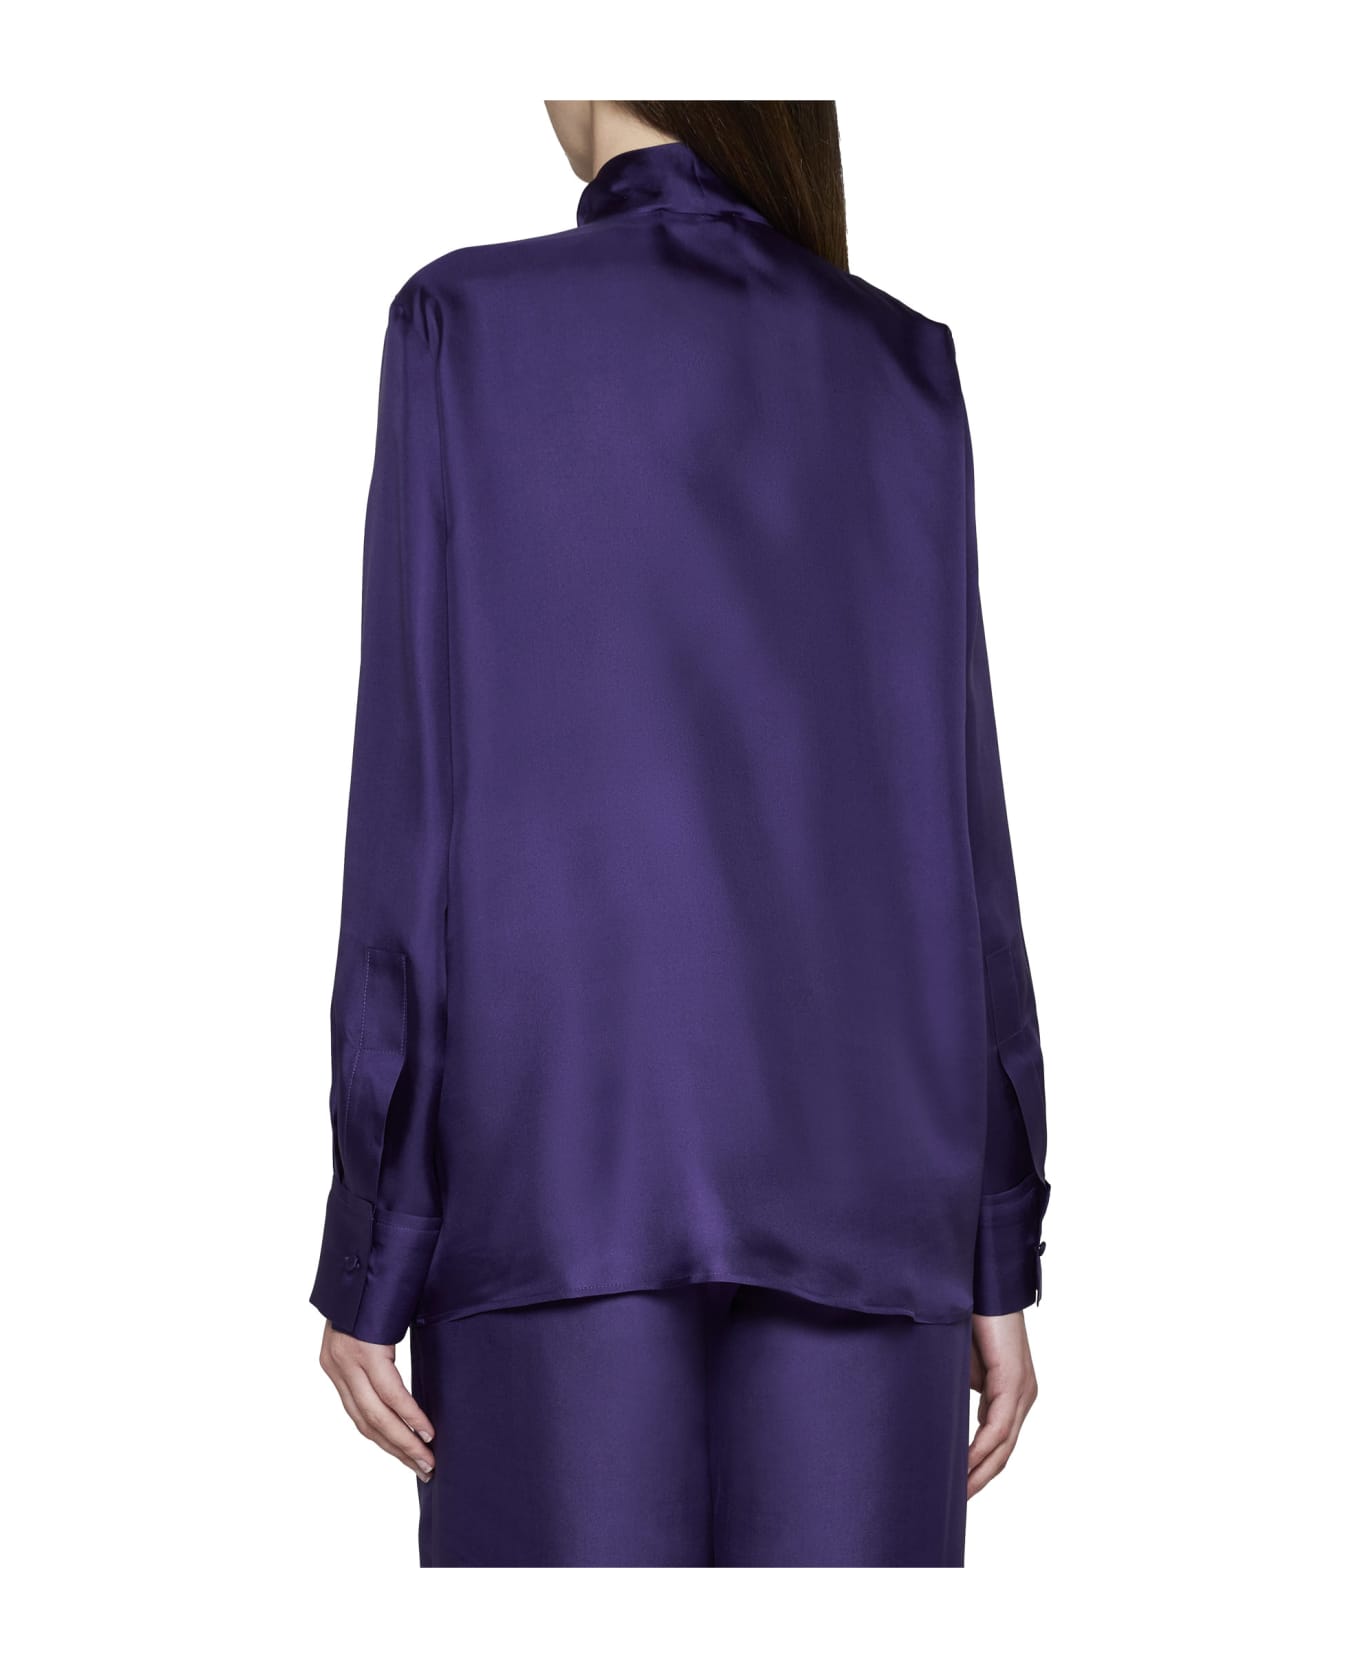 Blanca Vita Shirt - Purple